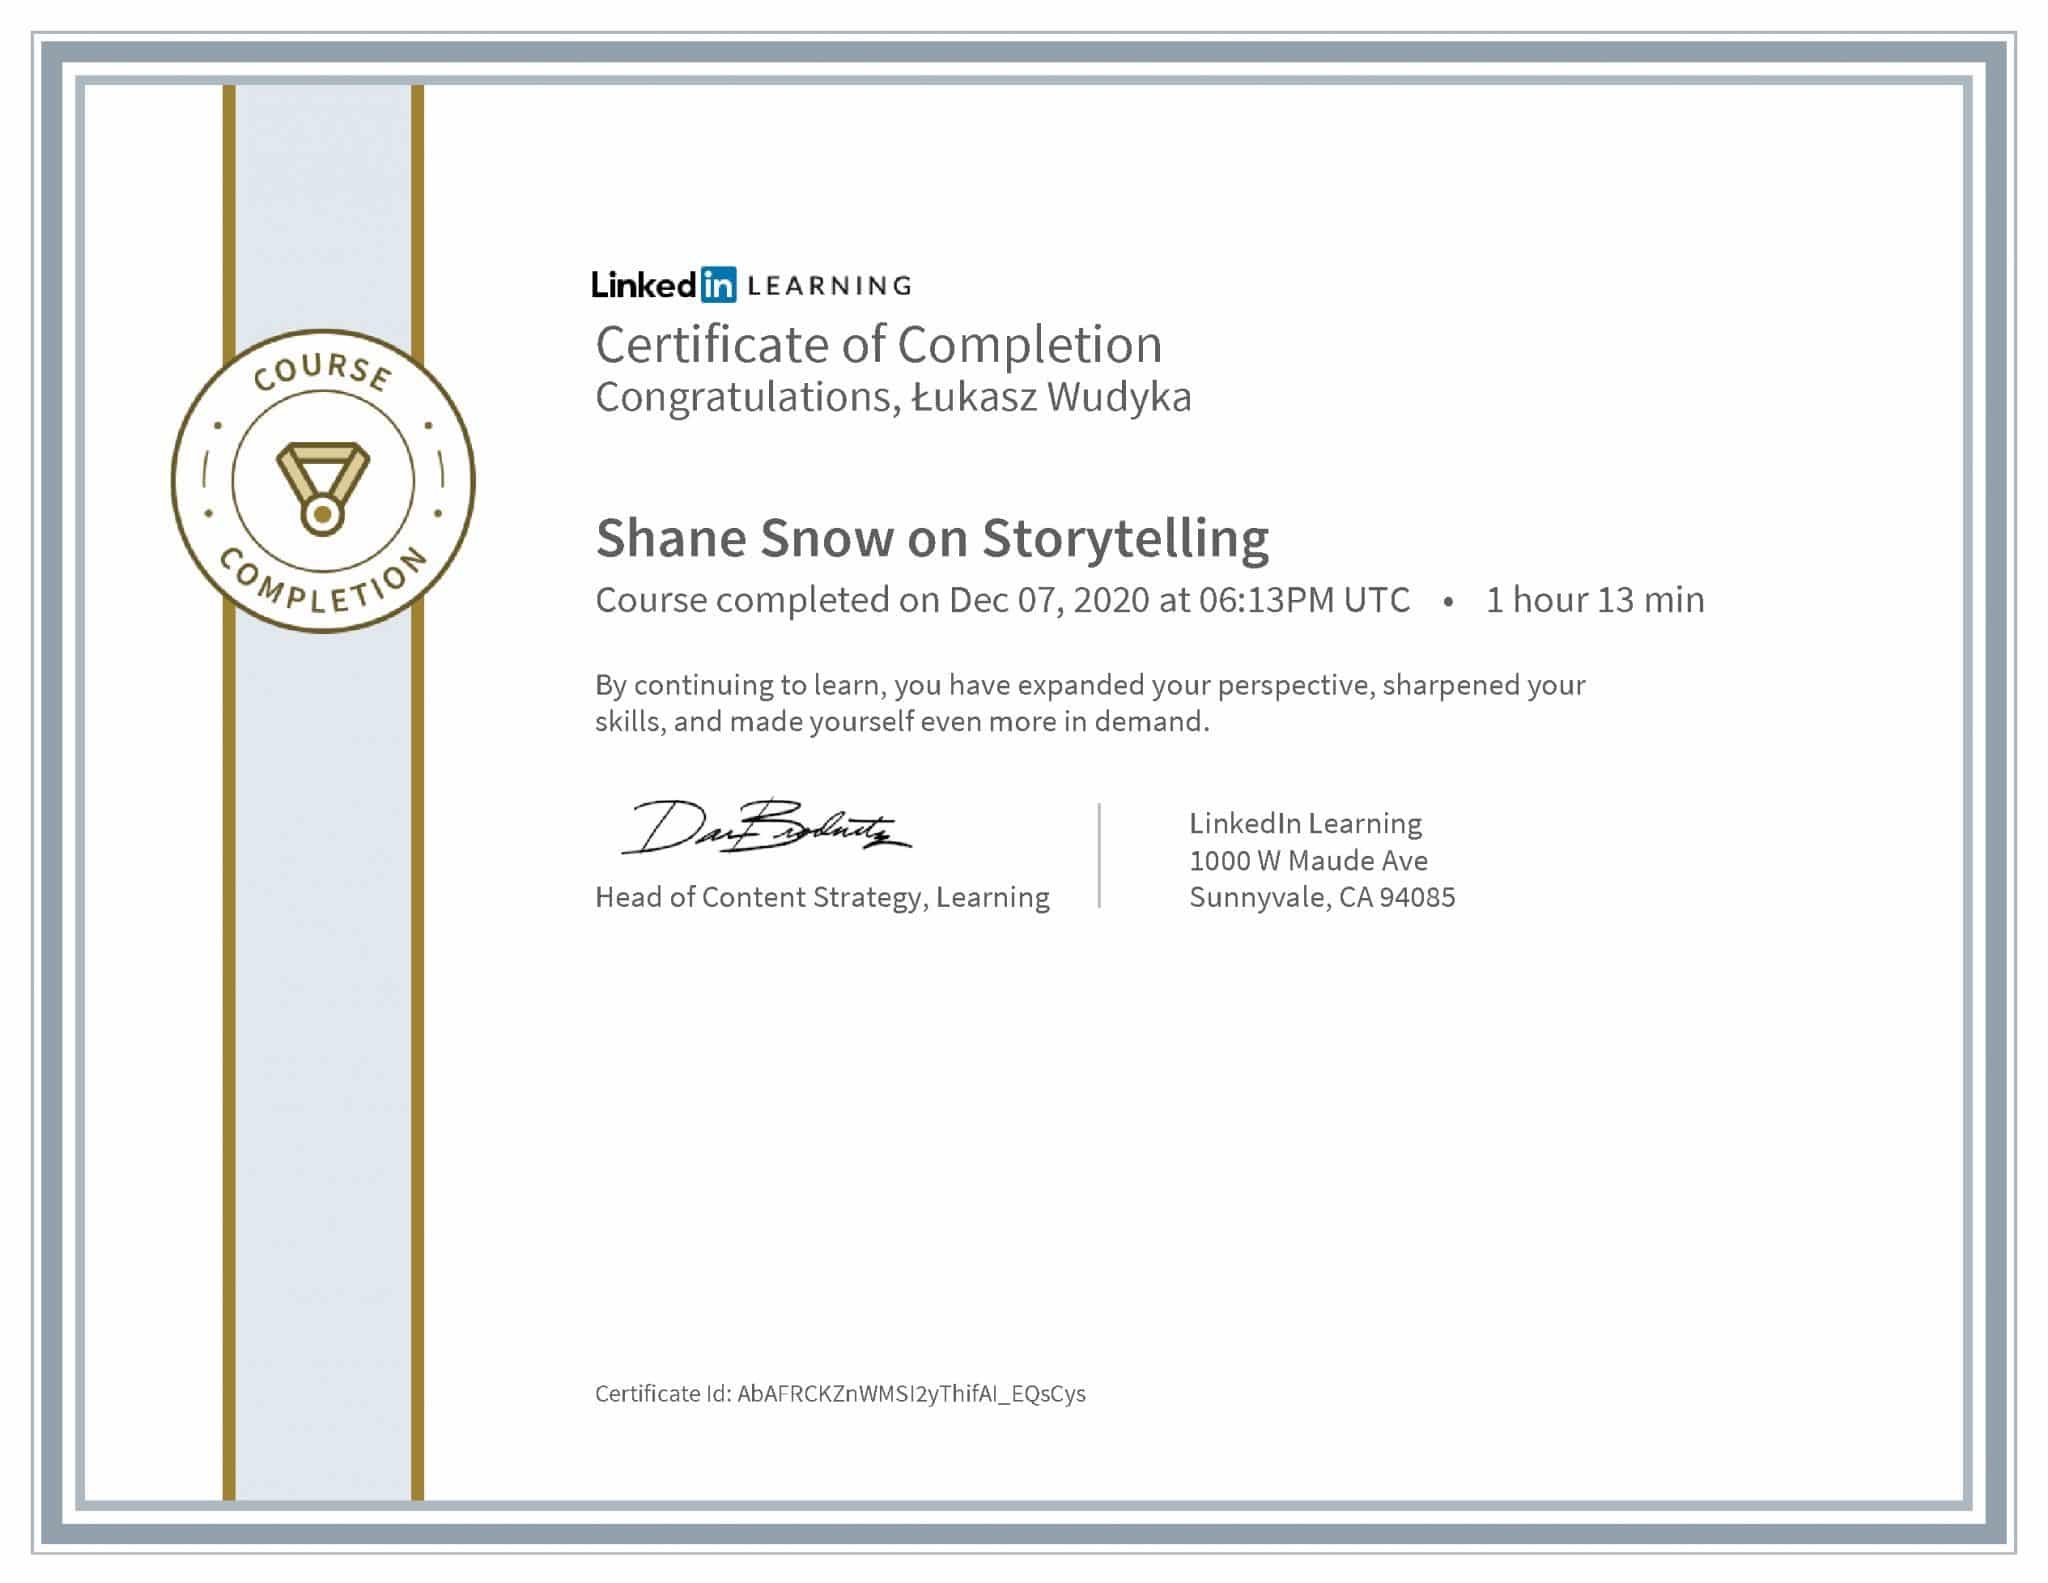 Łukasz Wudyka certyfikat LinkedIn Shane Snow on Storytelling